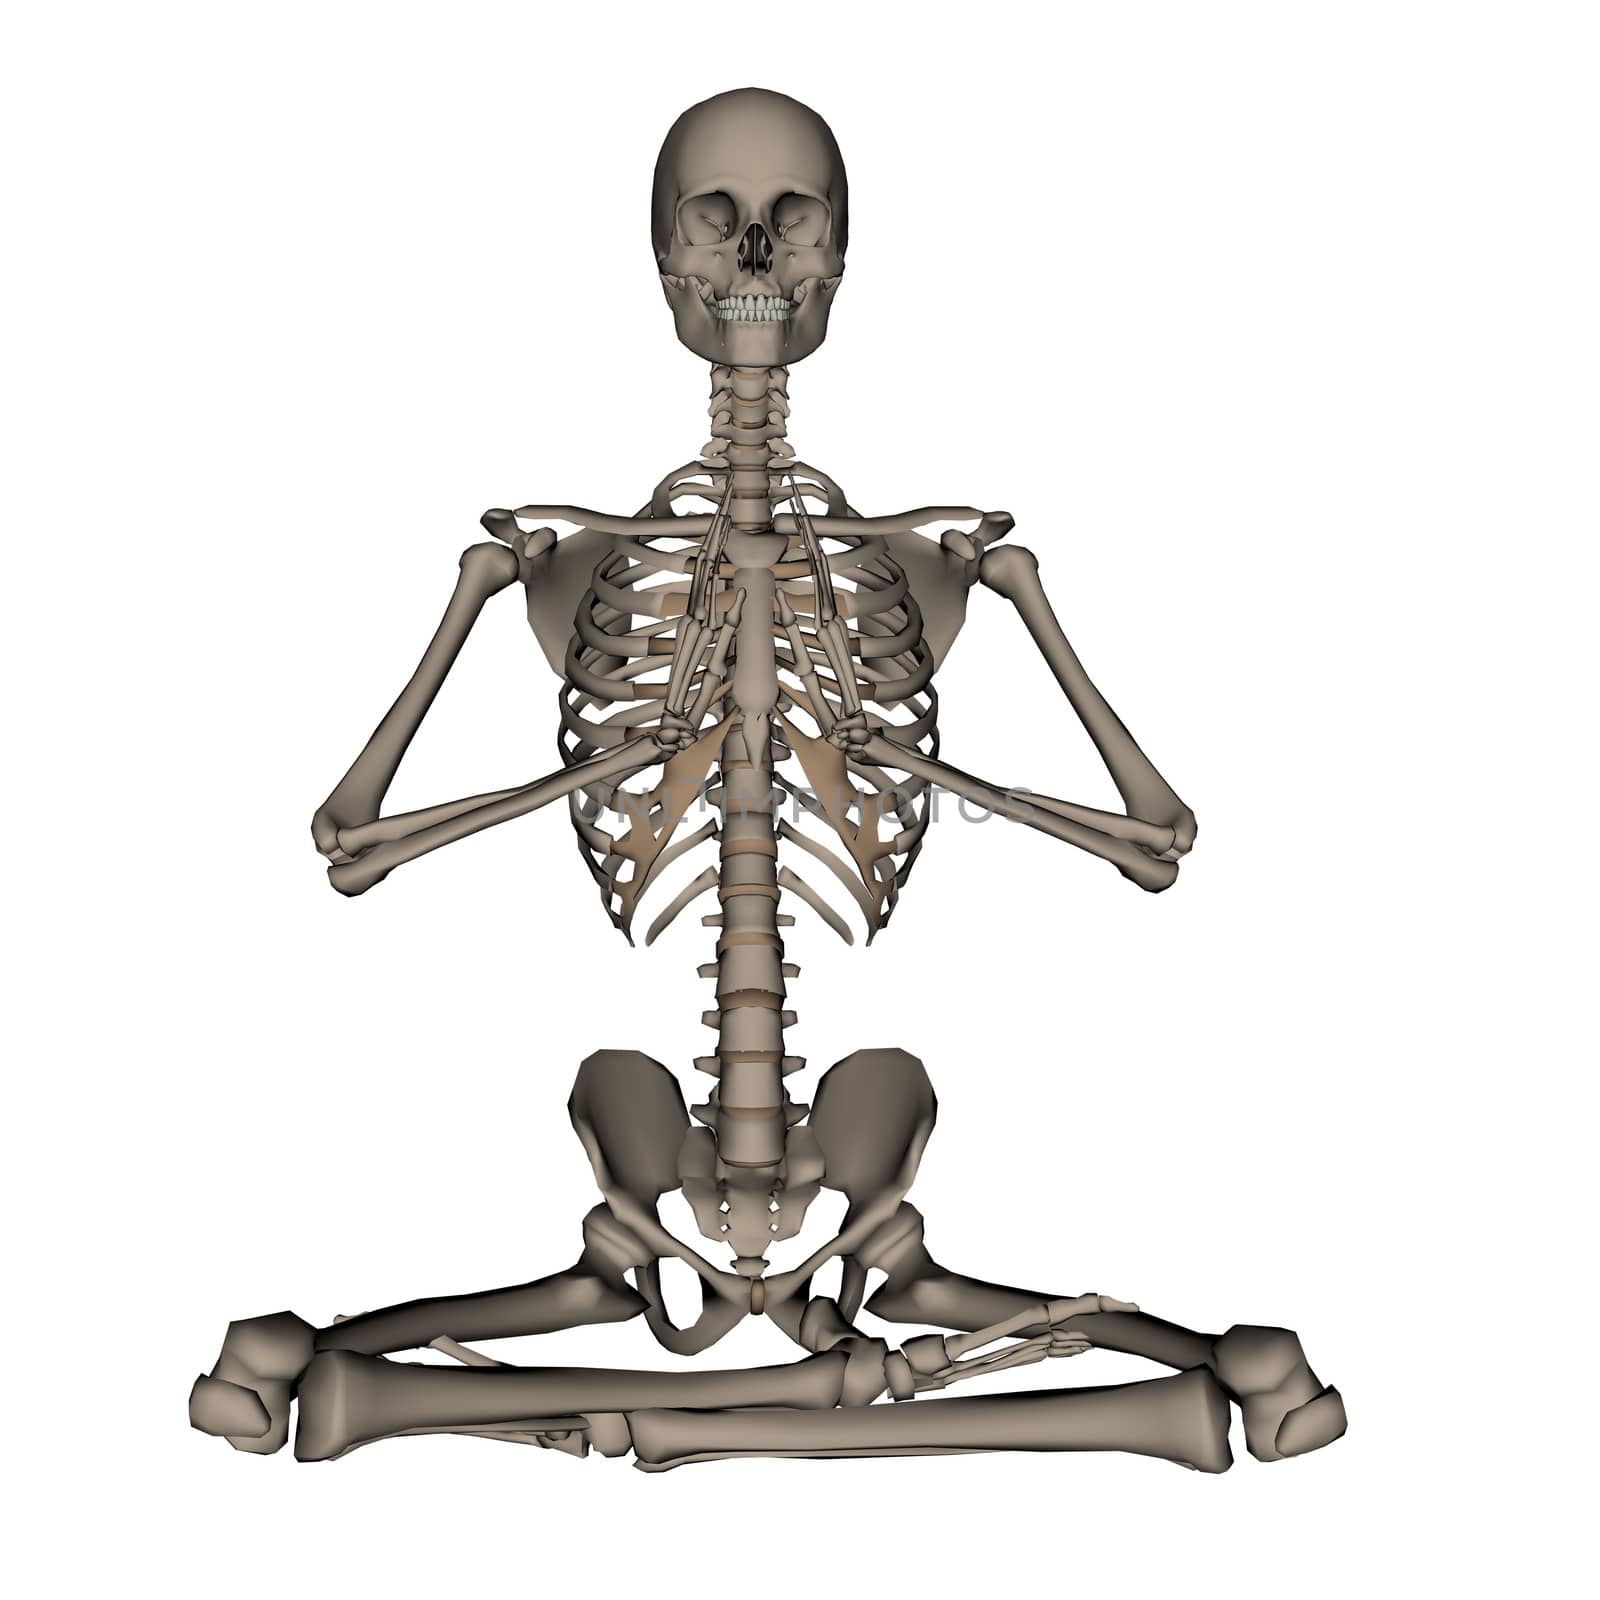 Human skeleton meditation- 3D render by Elenaphotos21